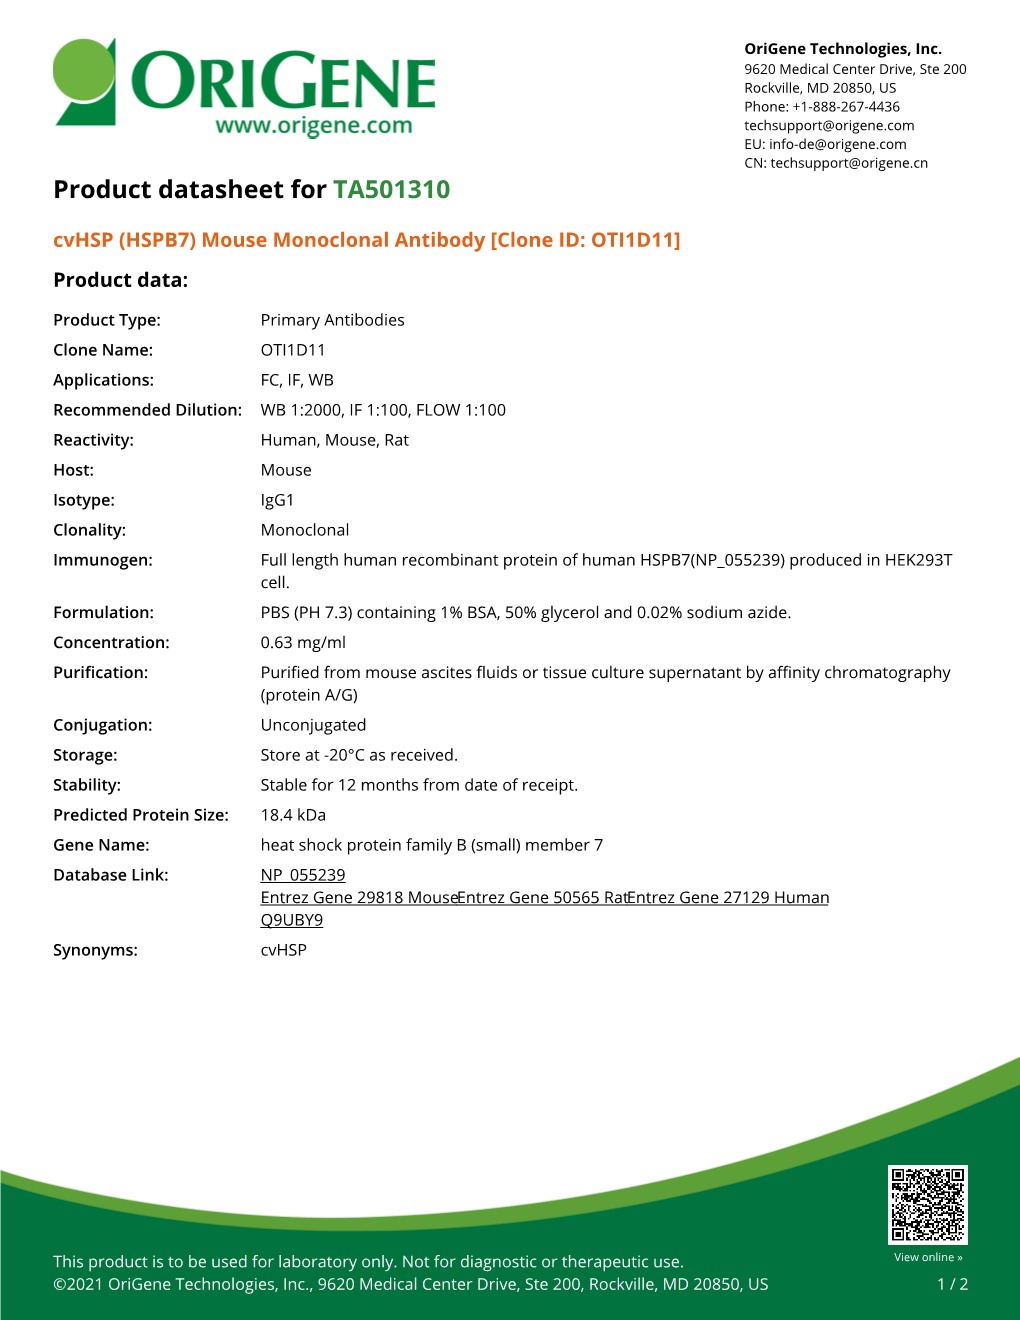 Cvhsp (HSPB7) Mouse Monoclonal Antibody [Clone ID: OTI1D11] Product Data